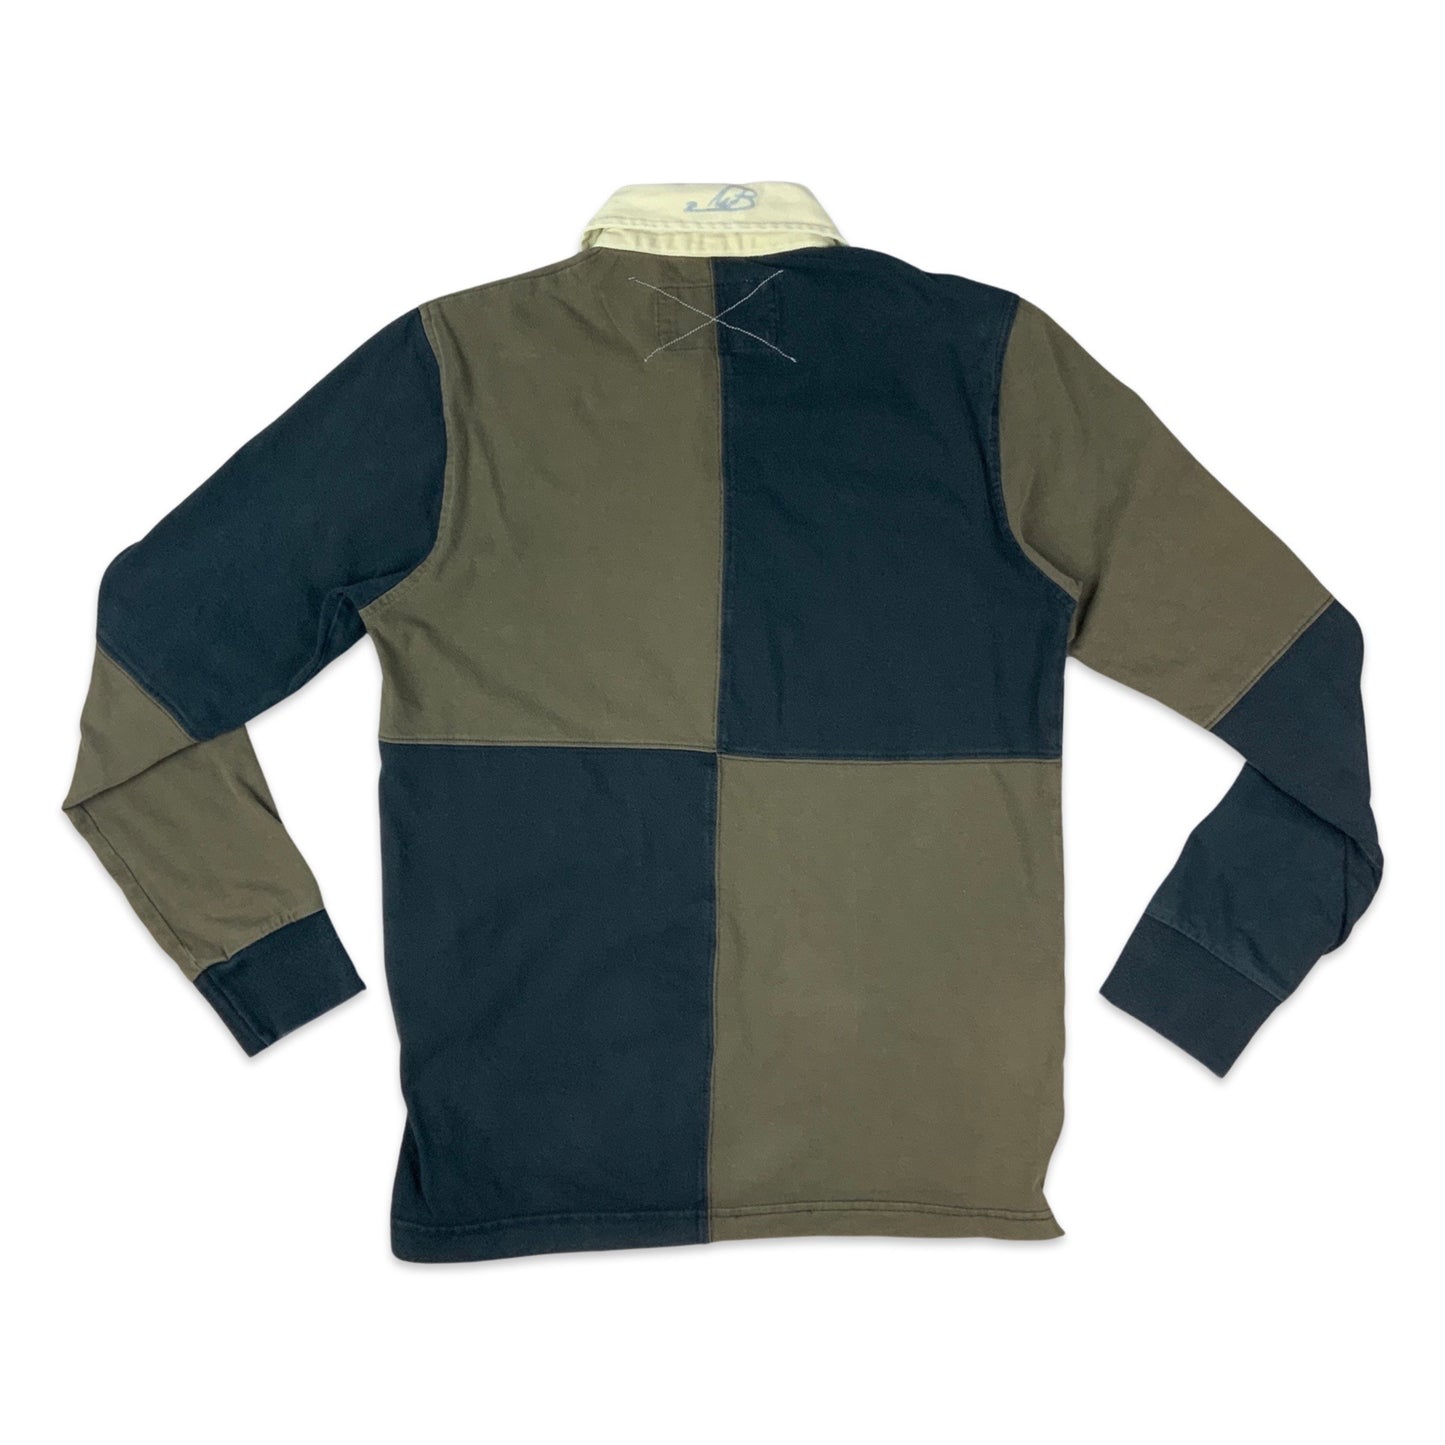 Vintage Adidas Navy & Khaki Rugby Shirt XS S